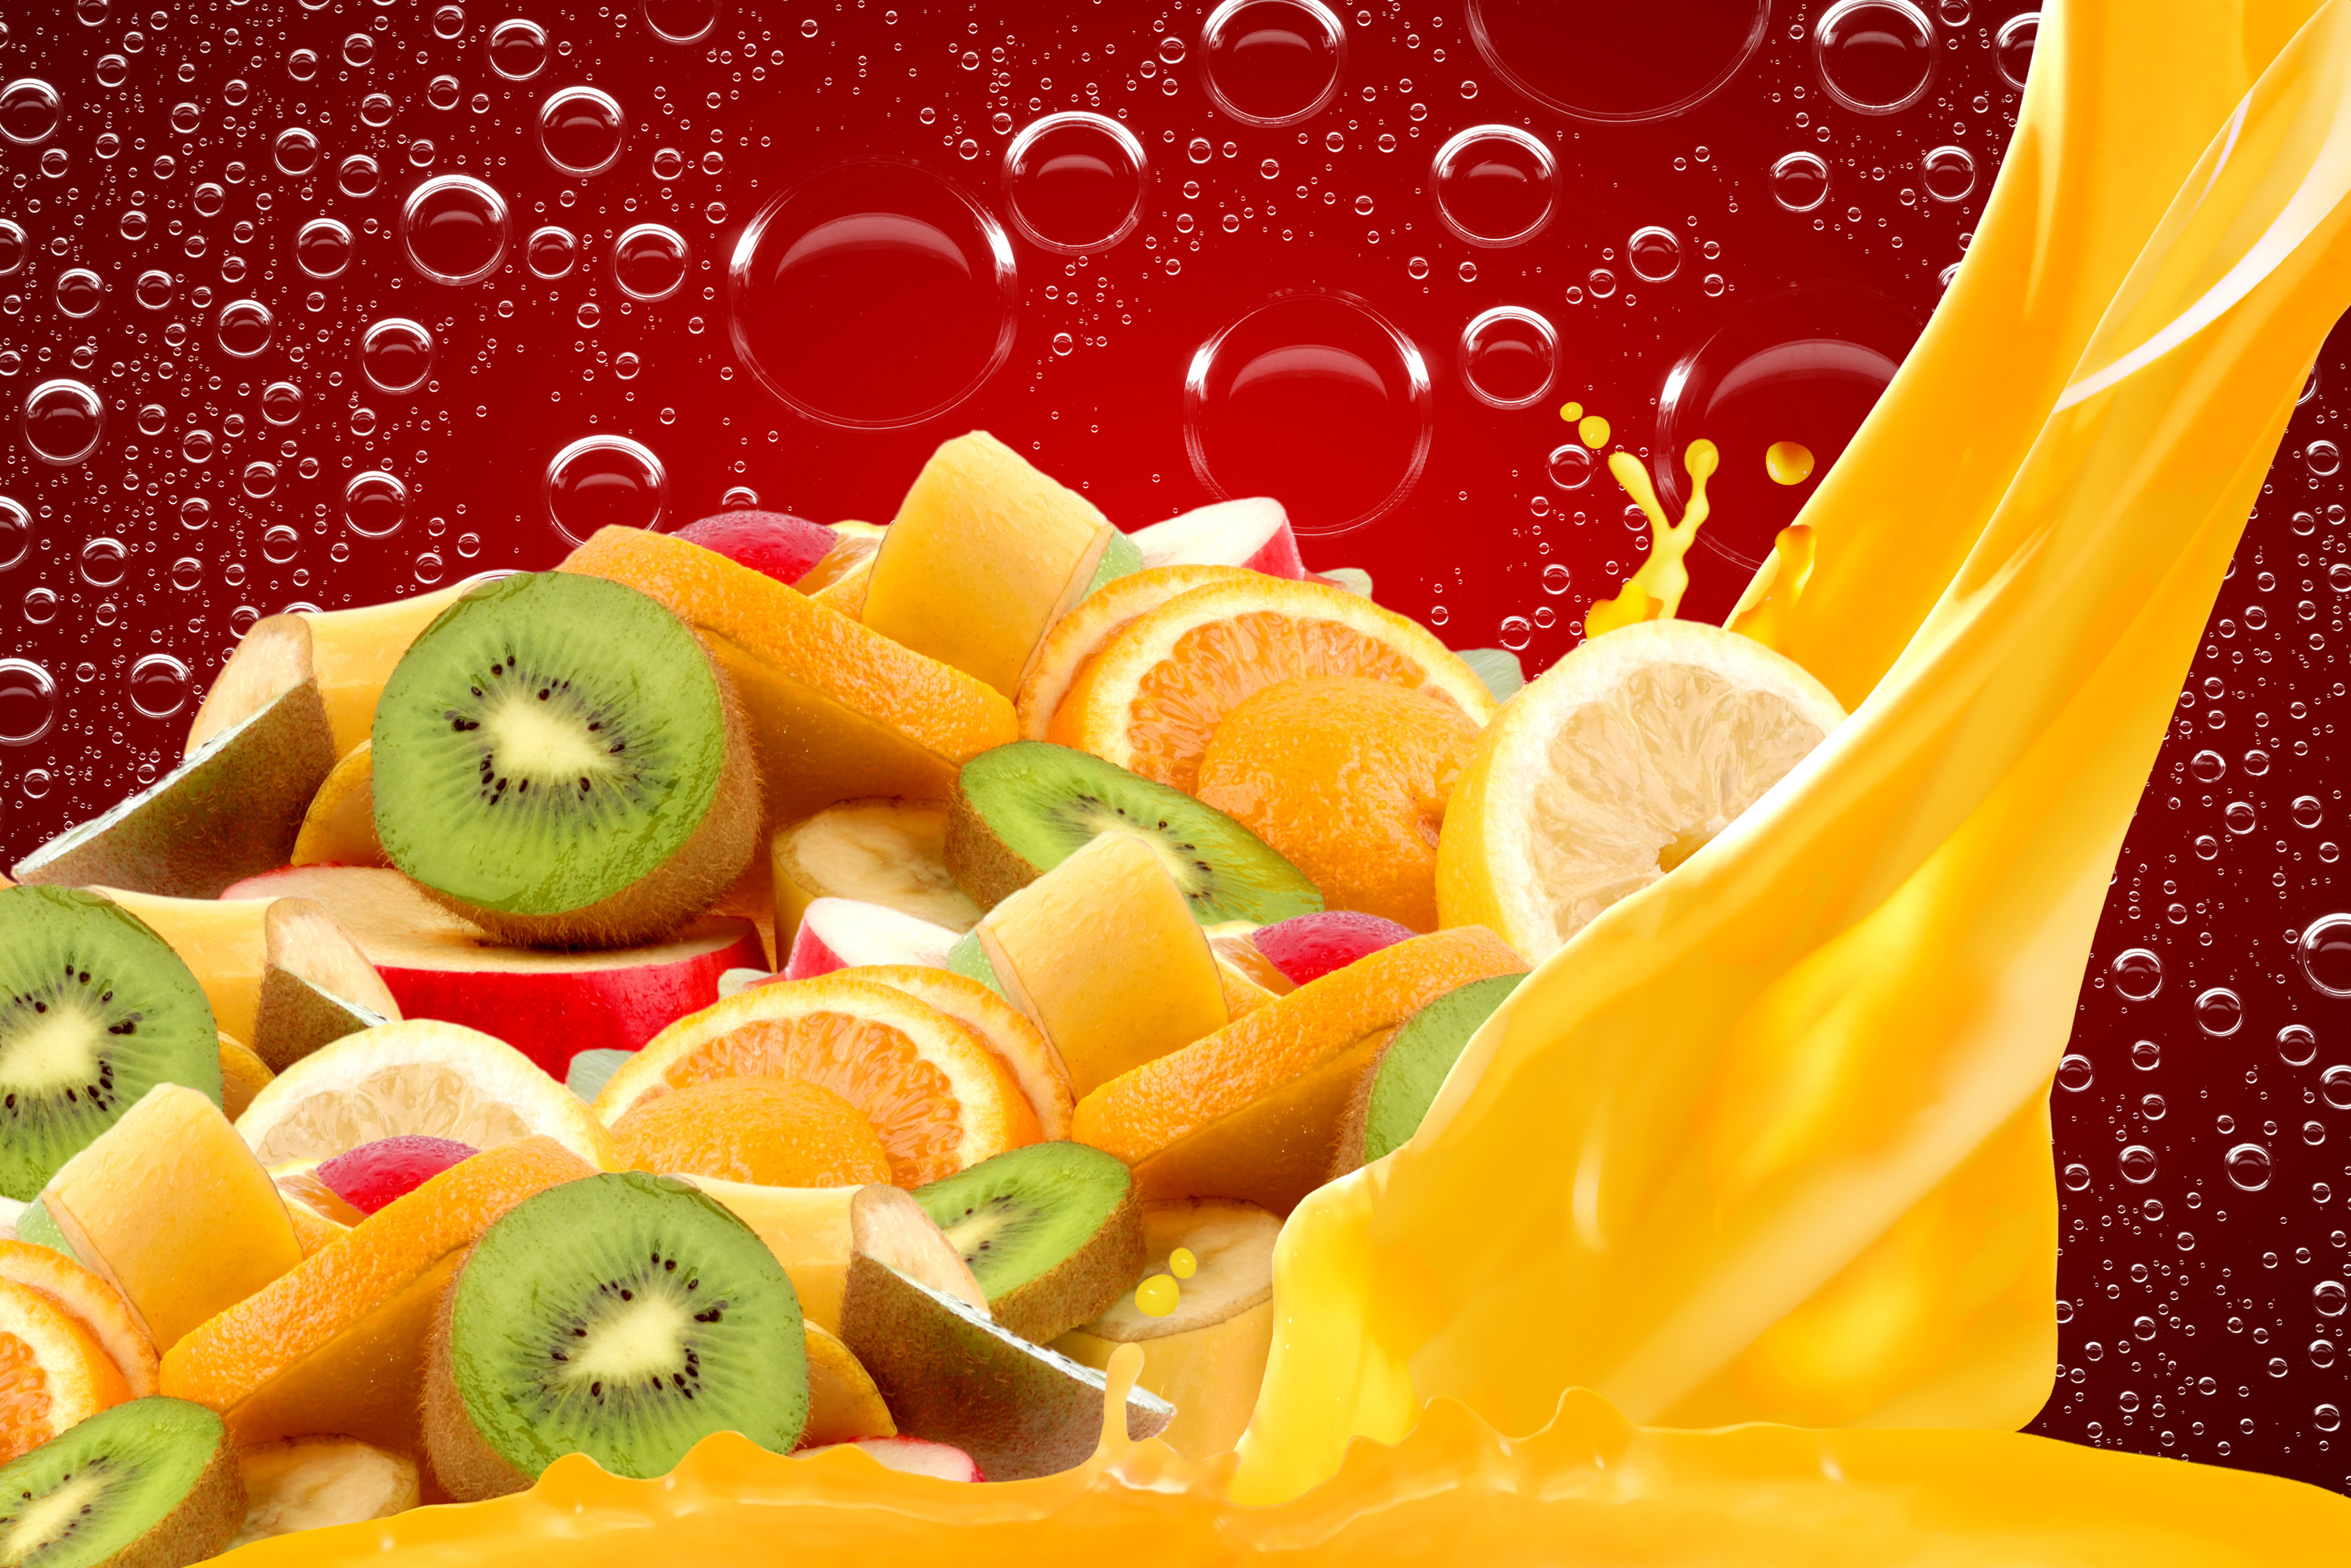 Descarga gratis la imagen Frutas, Kiwi, Fruta, Burbuja, Alimento, Naranja) en el escritorio de tu PC